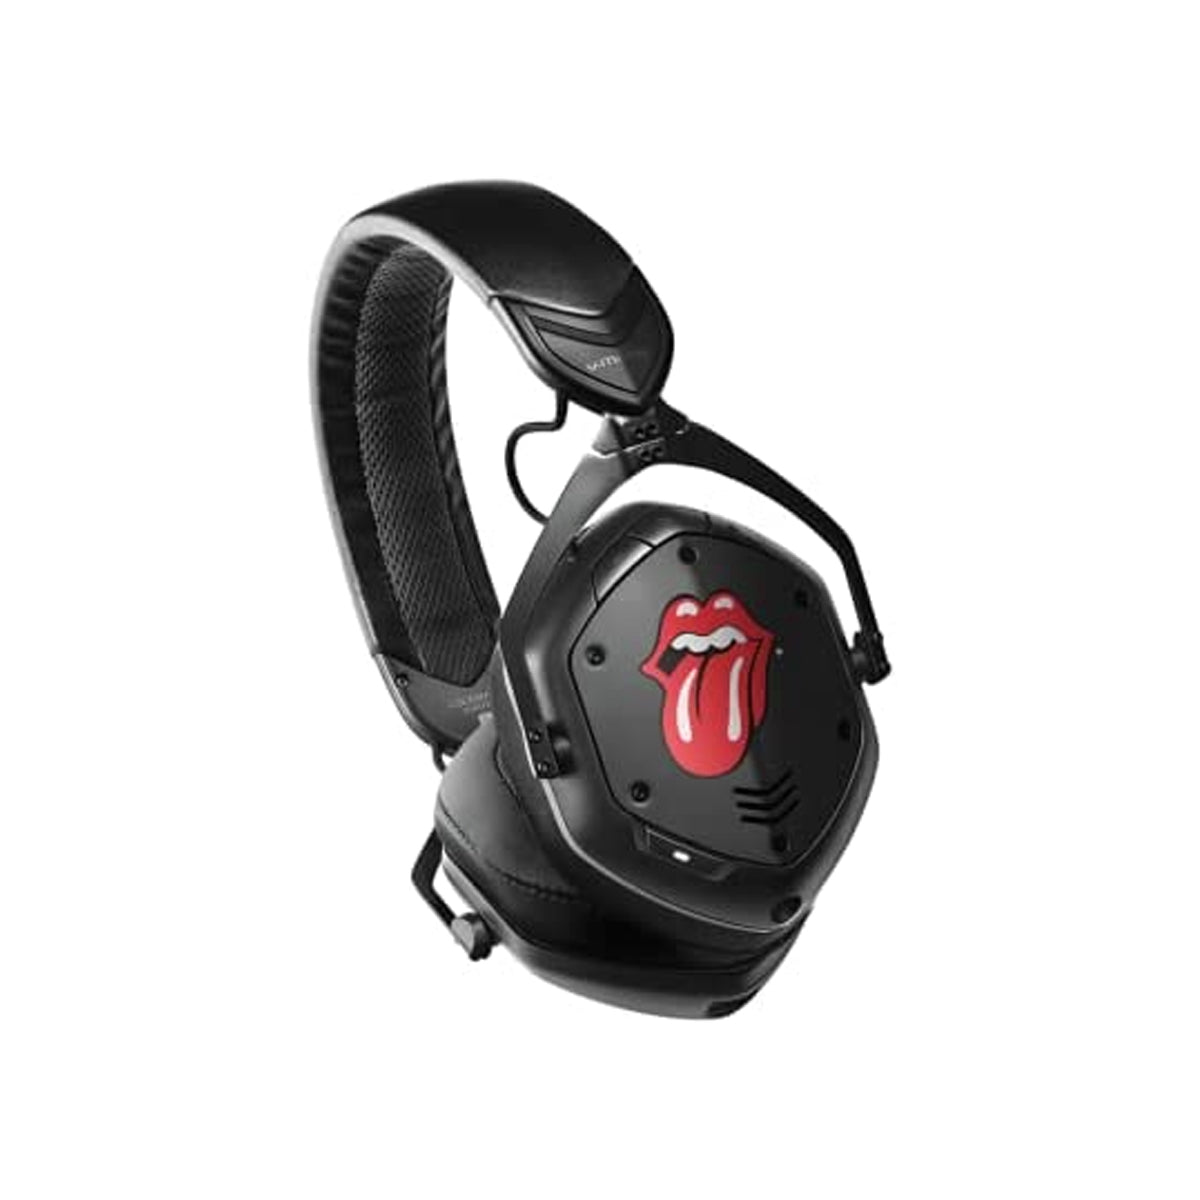 Rolling Stones X No Filter V-moda Crossfade 2 Wireless Over-ear Headphone In Black